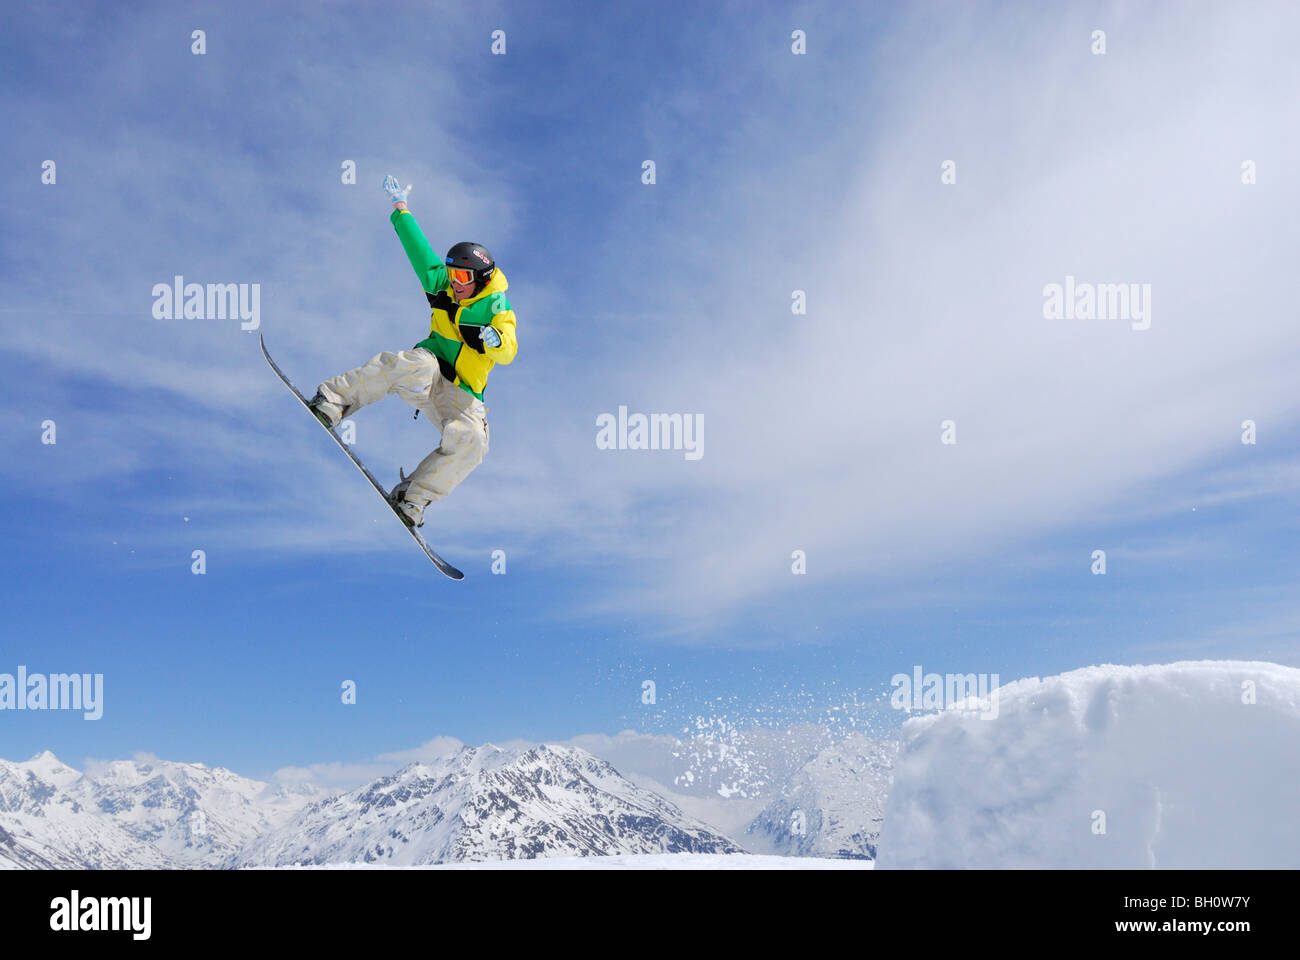 Snowboarder in mid-air, ski area Soelden, Oetztal, Tyrol, Austria Stock Photo